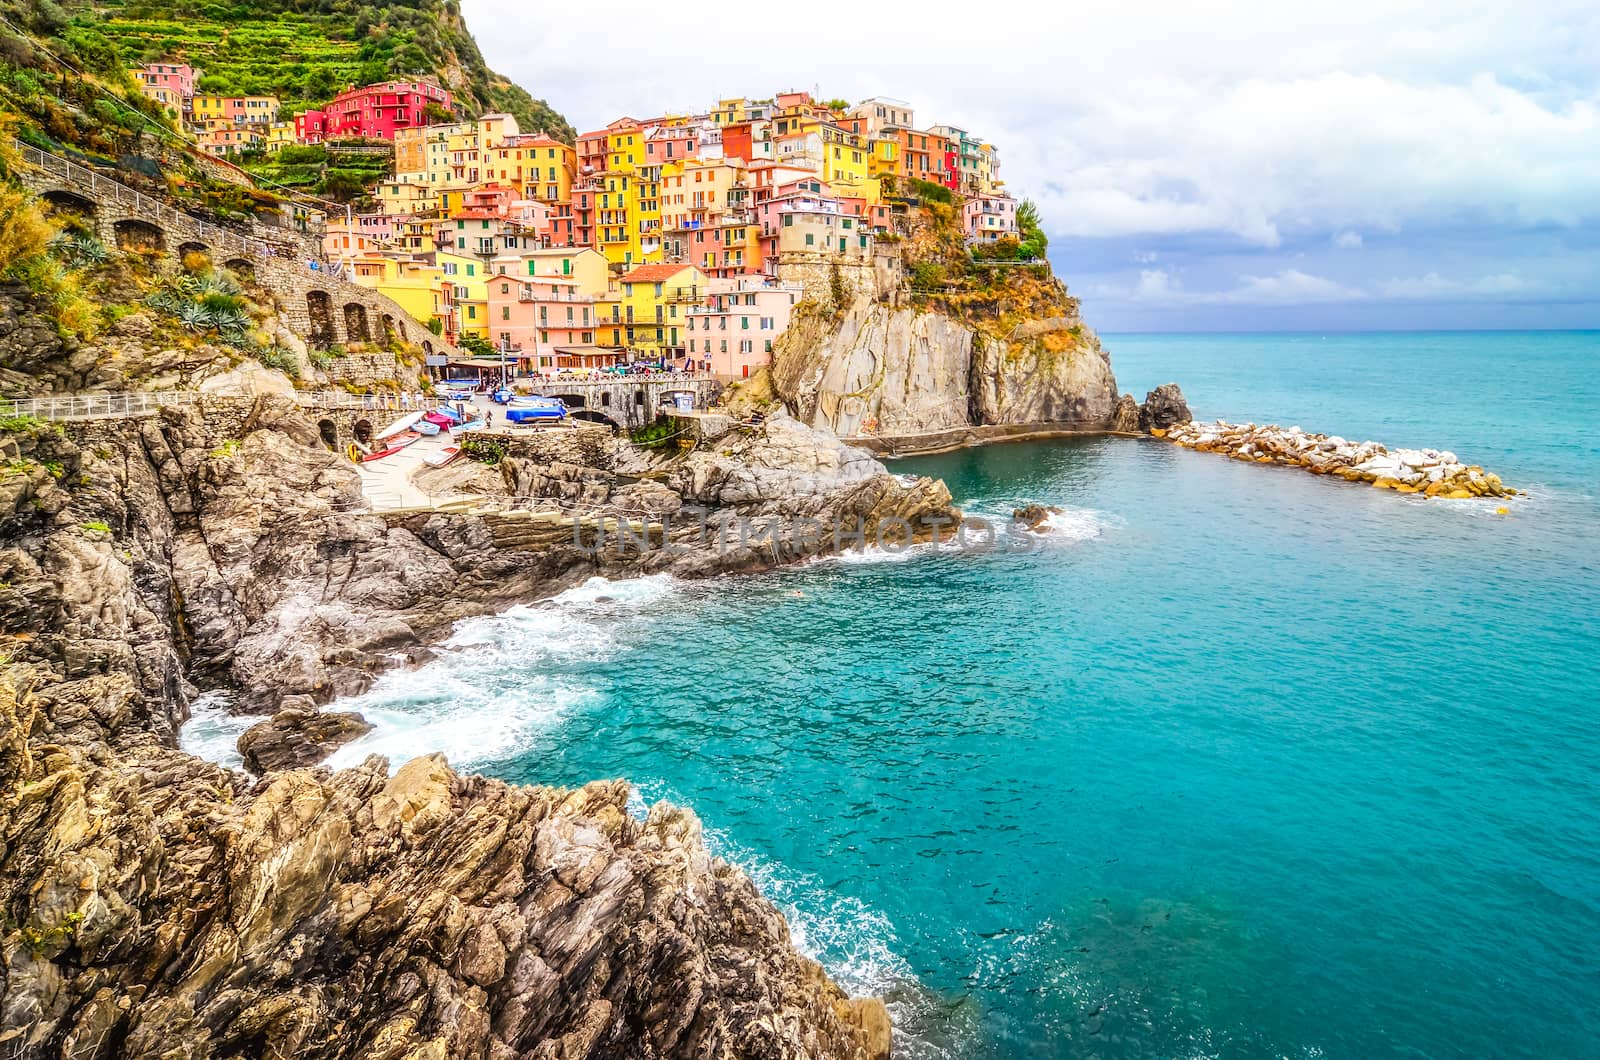 Scenic view of colorful village Manarola in Cinque Terre, Italy